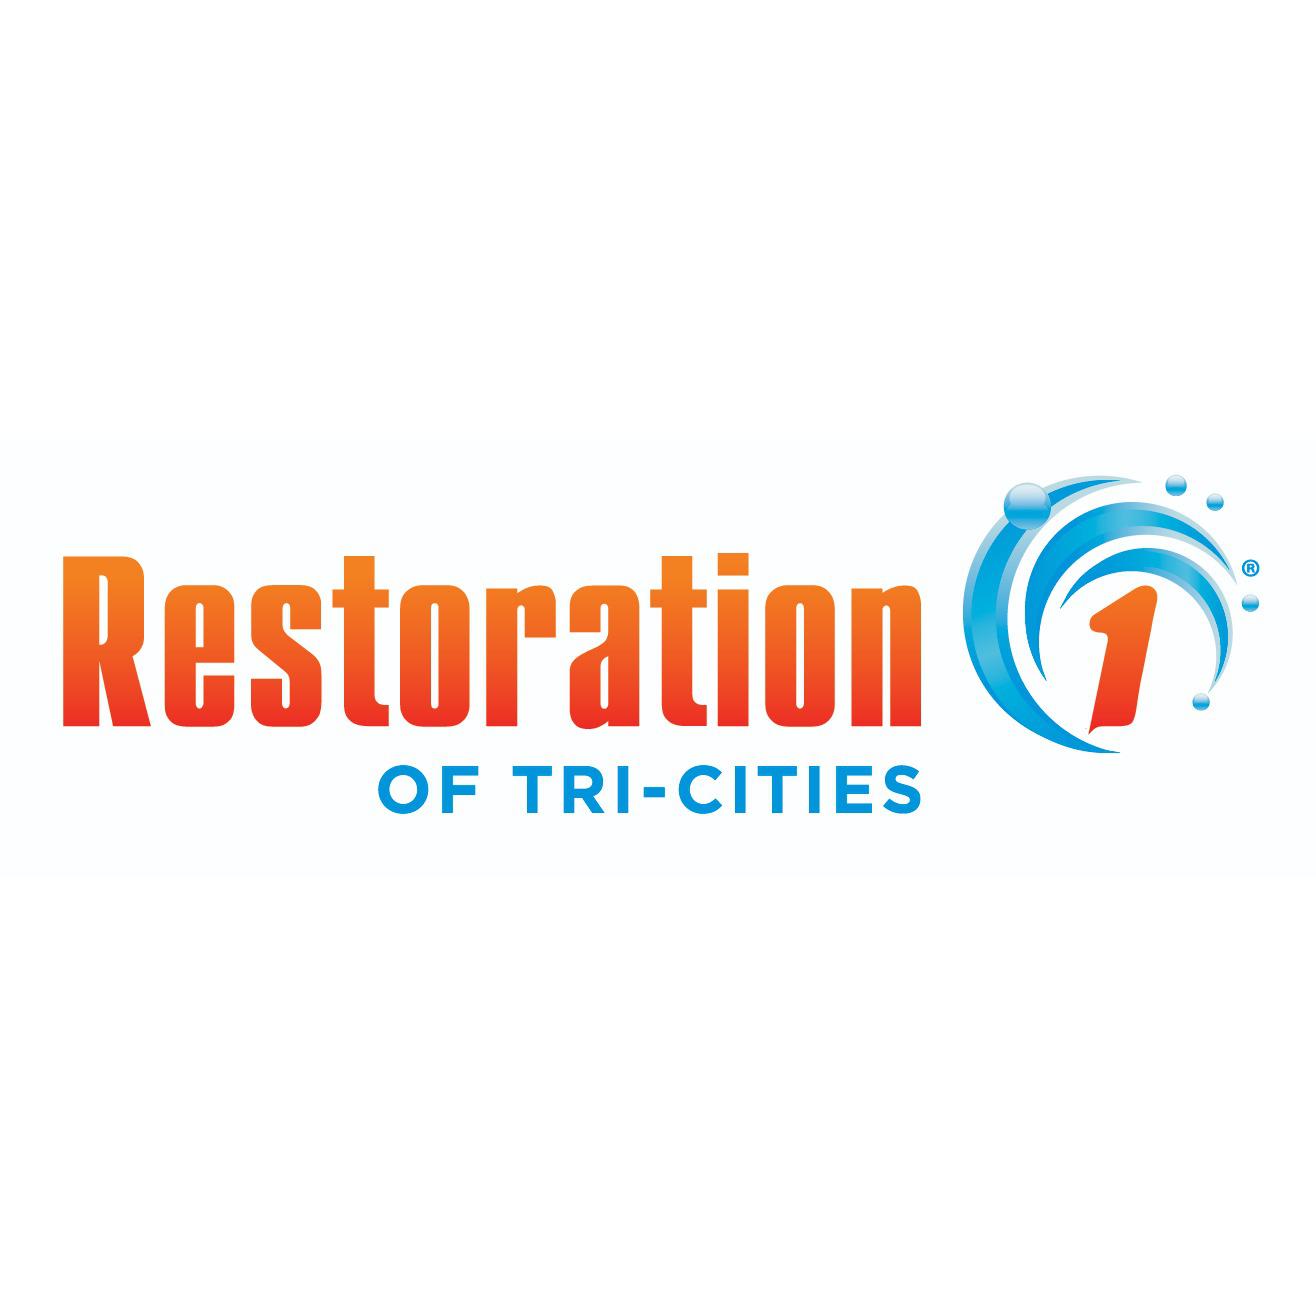 Restoration 1 of Tri-Cities